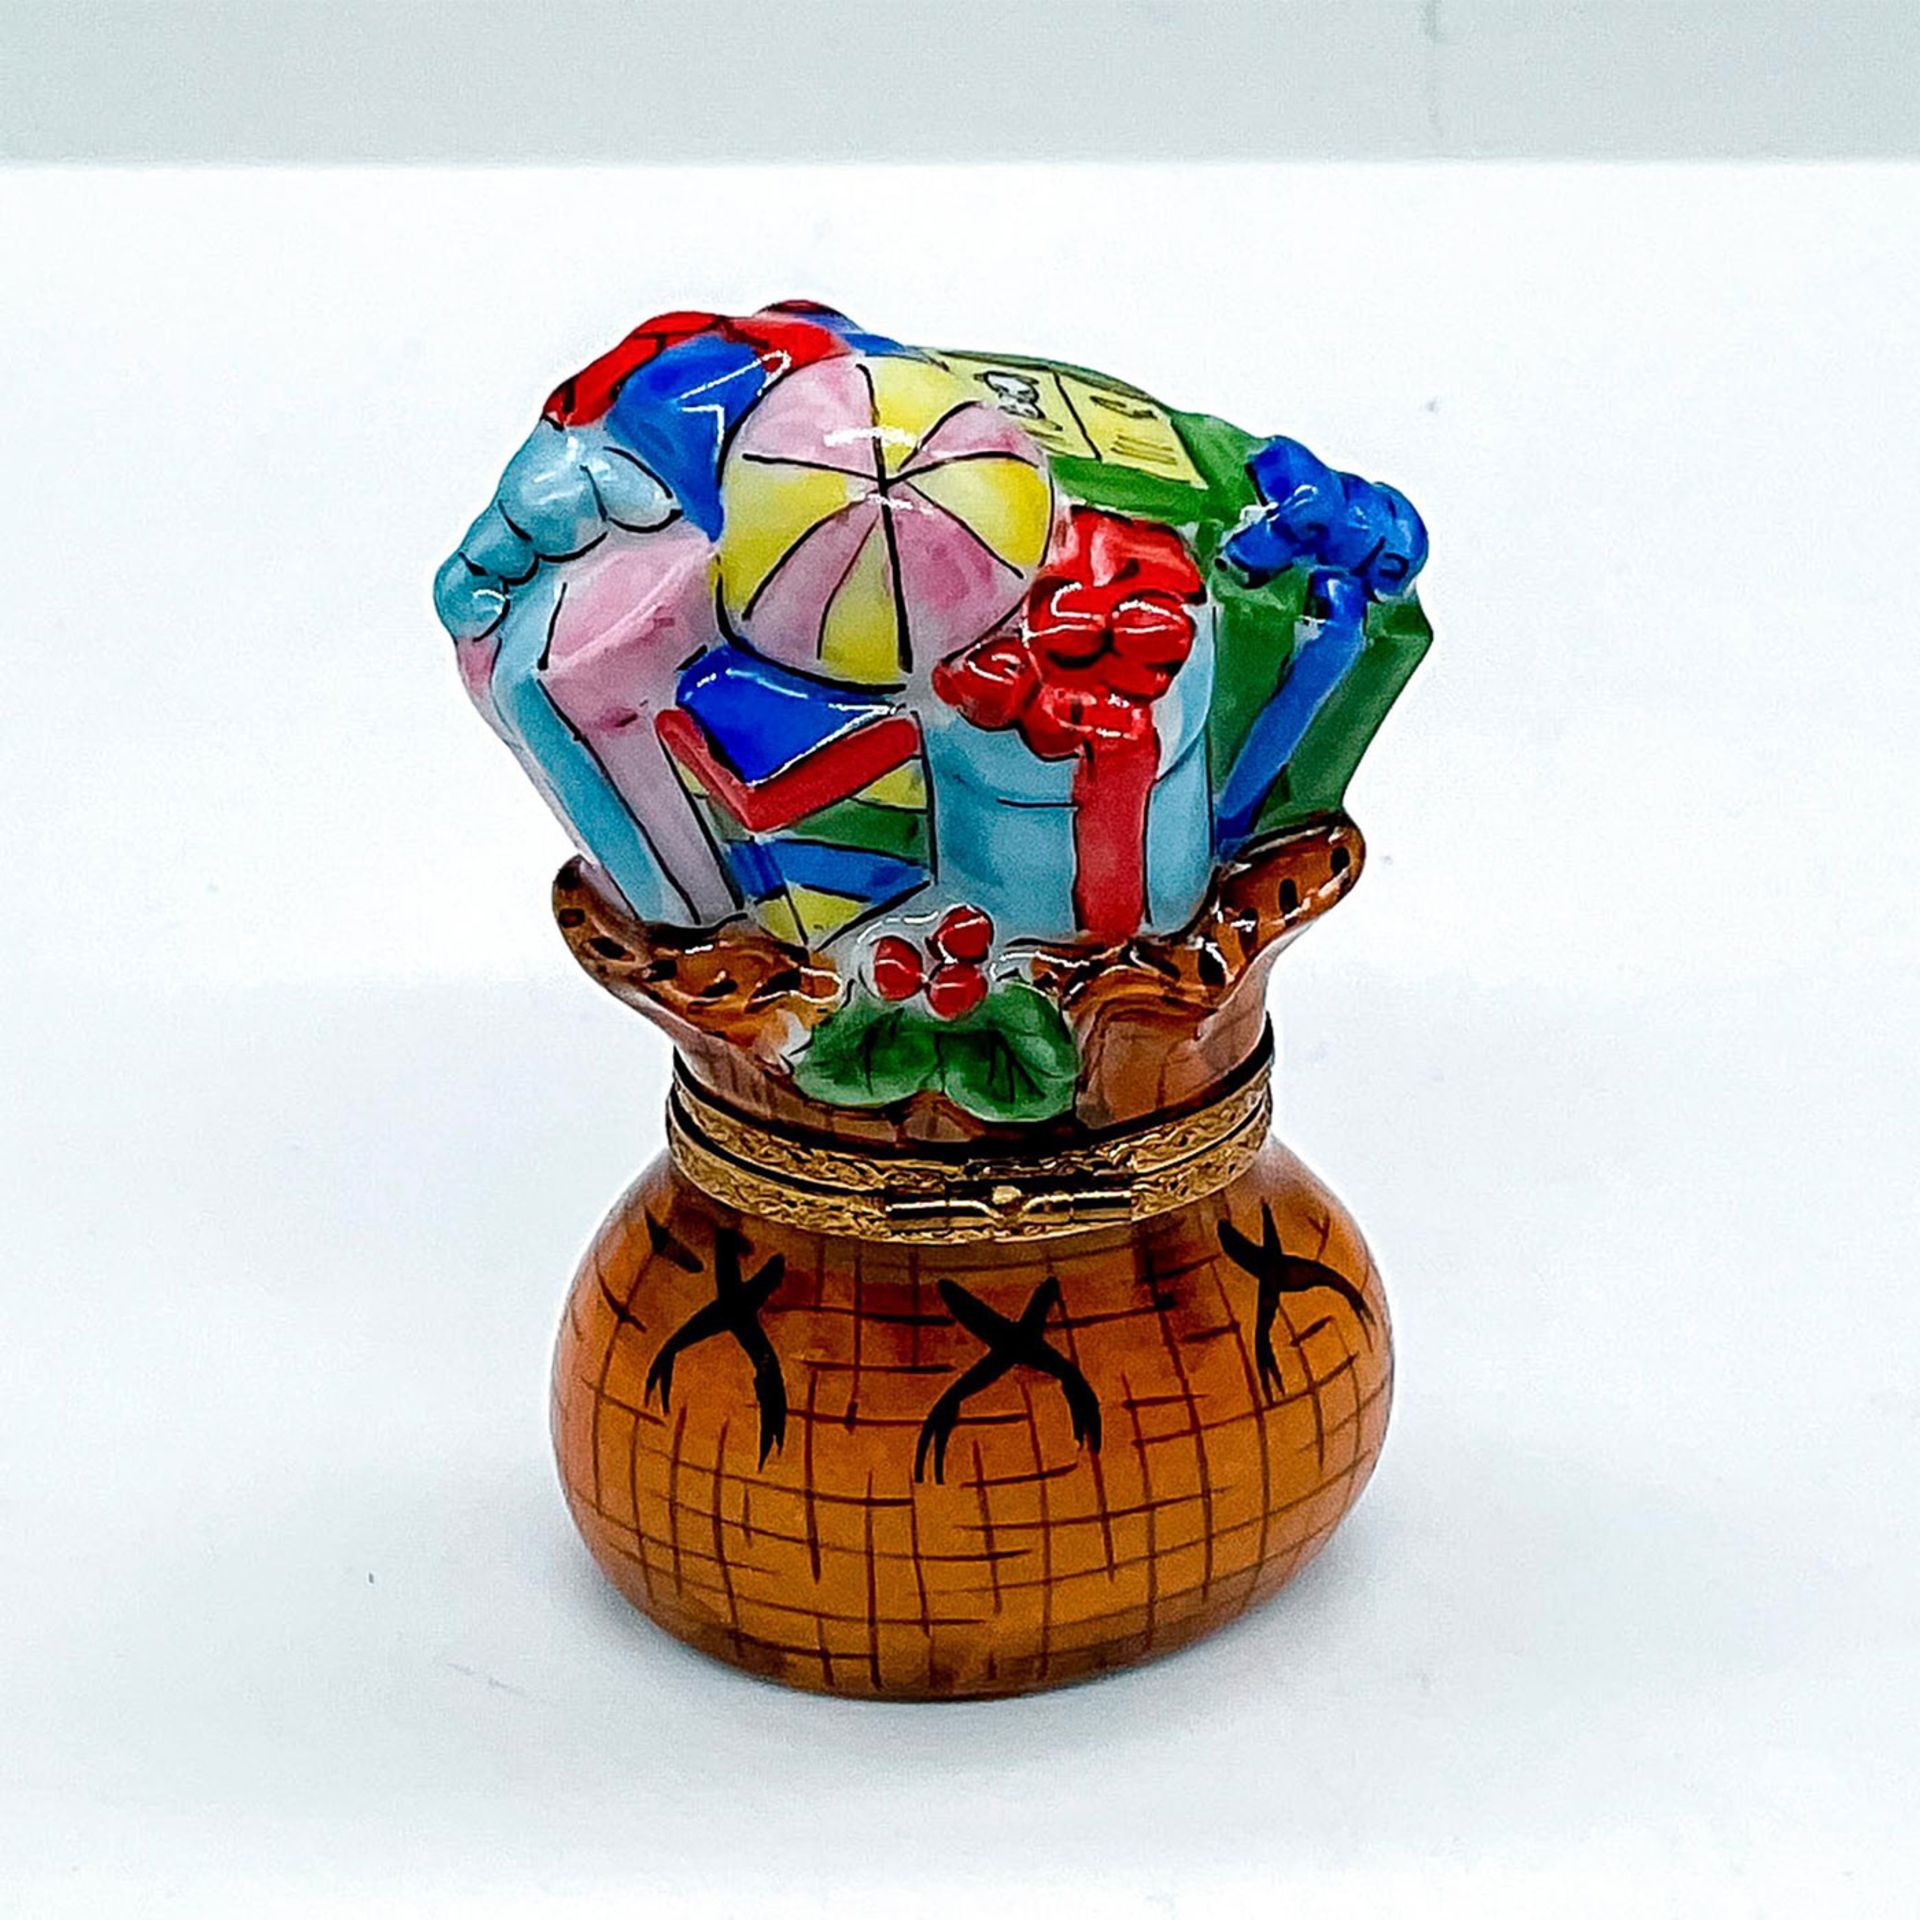 Dubarry Limoges Porcelain Charm Box, Basket of Gifts - Image 2 of 4